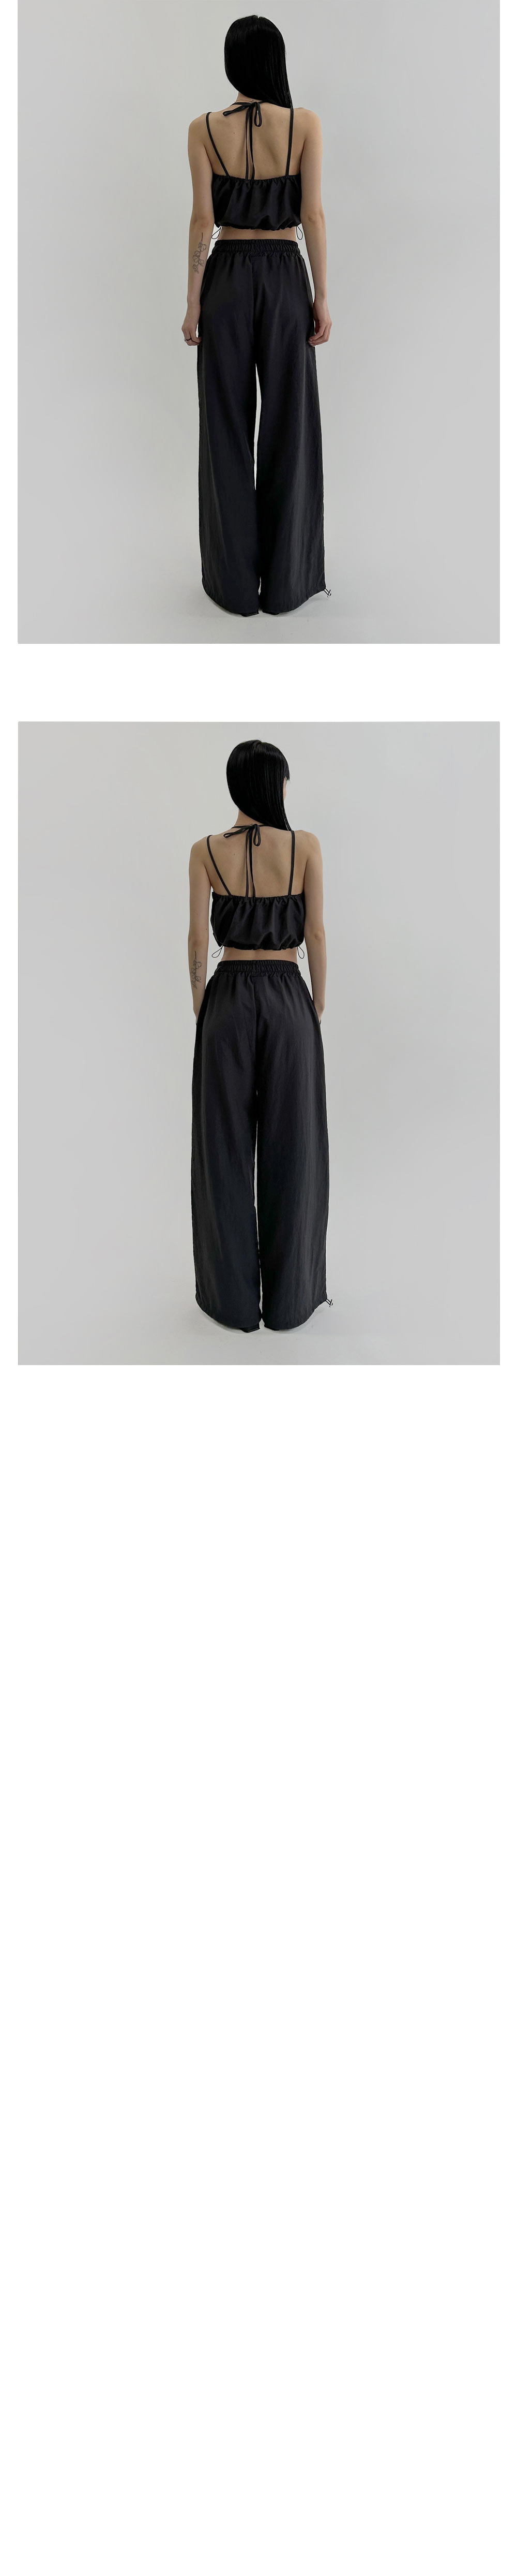 suspenders skirt/pants model image-S1L8